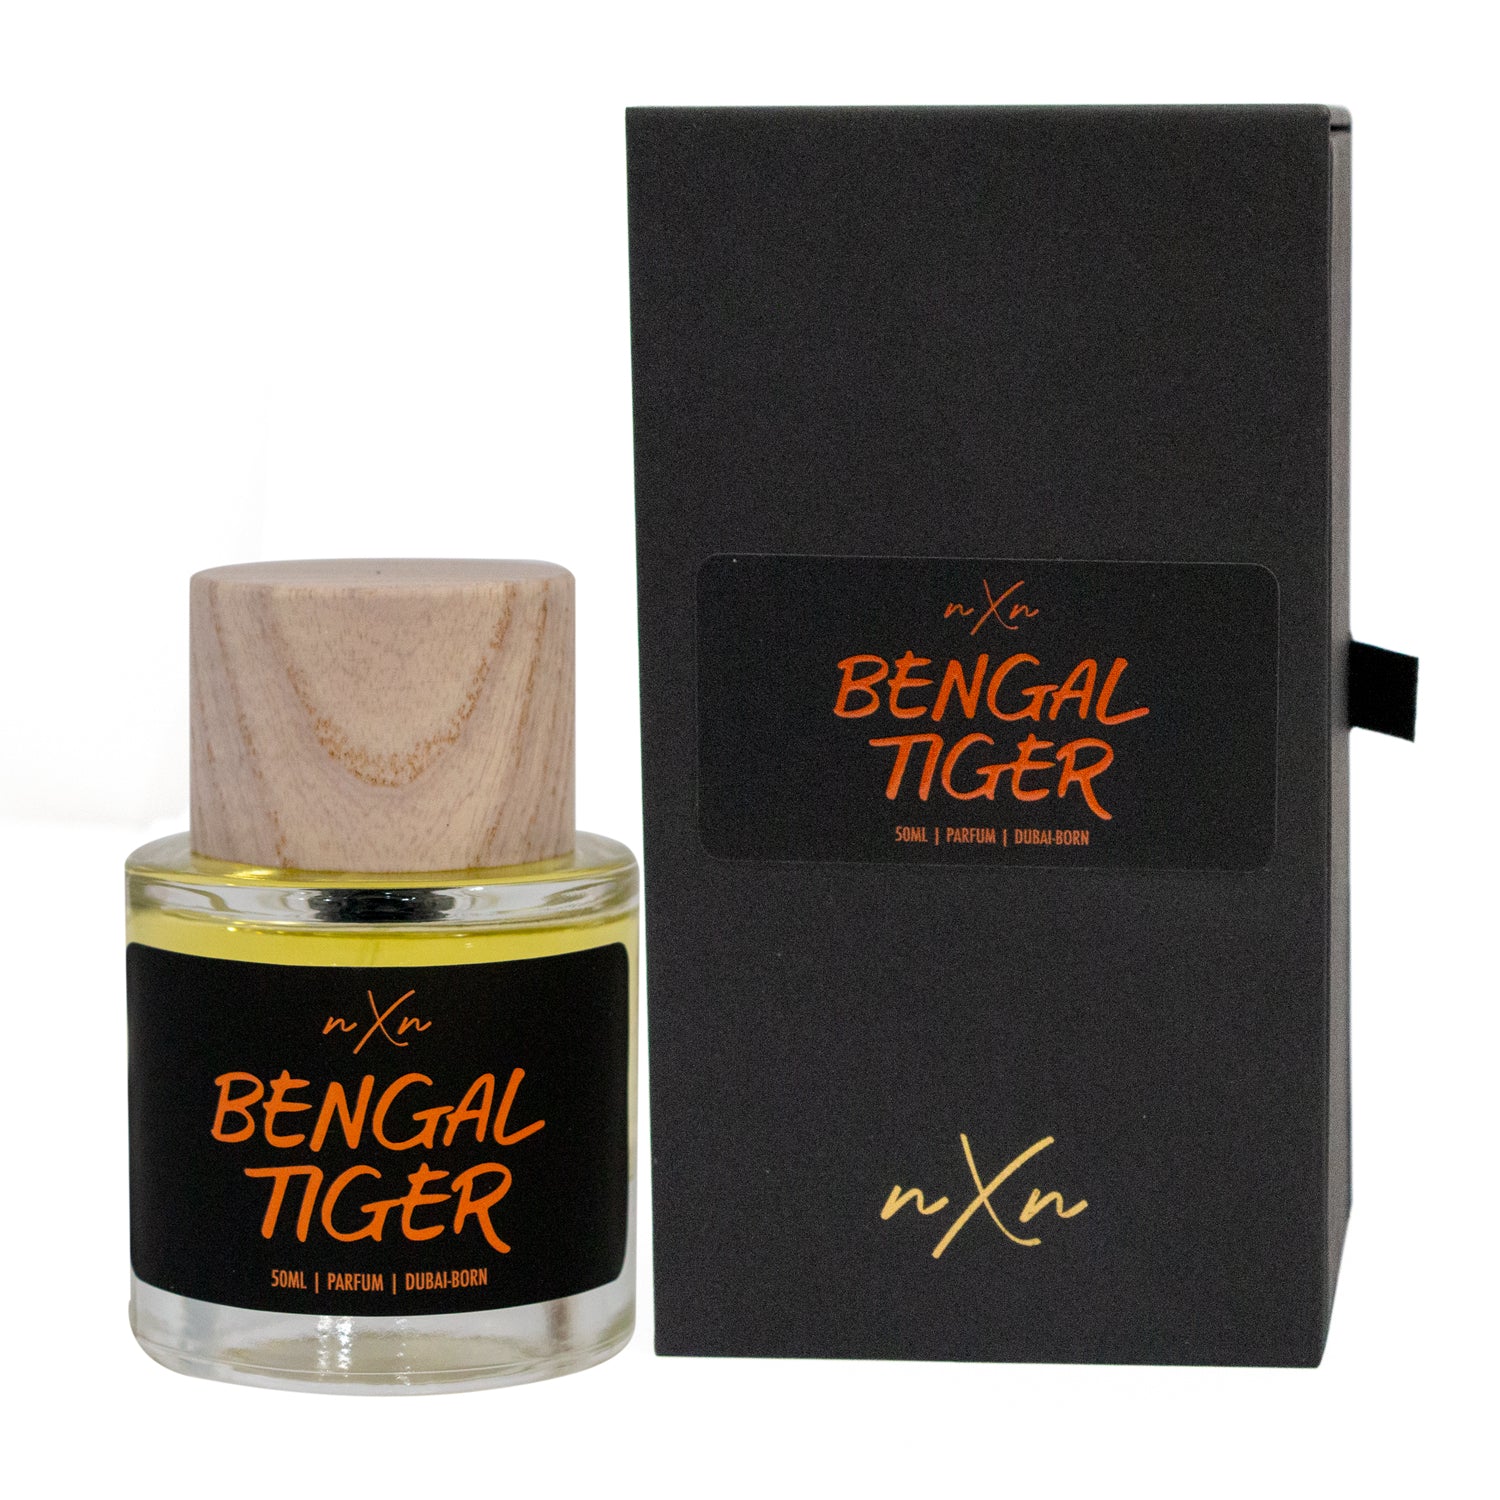 BENGAL TIGER by nXn Perfumes, Parfum, Unisex, 50ml